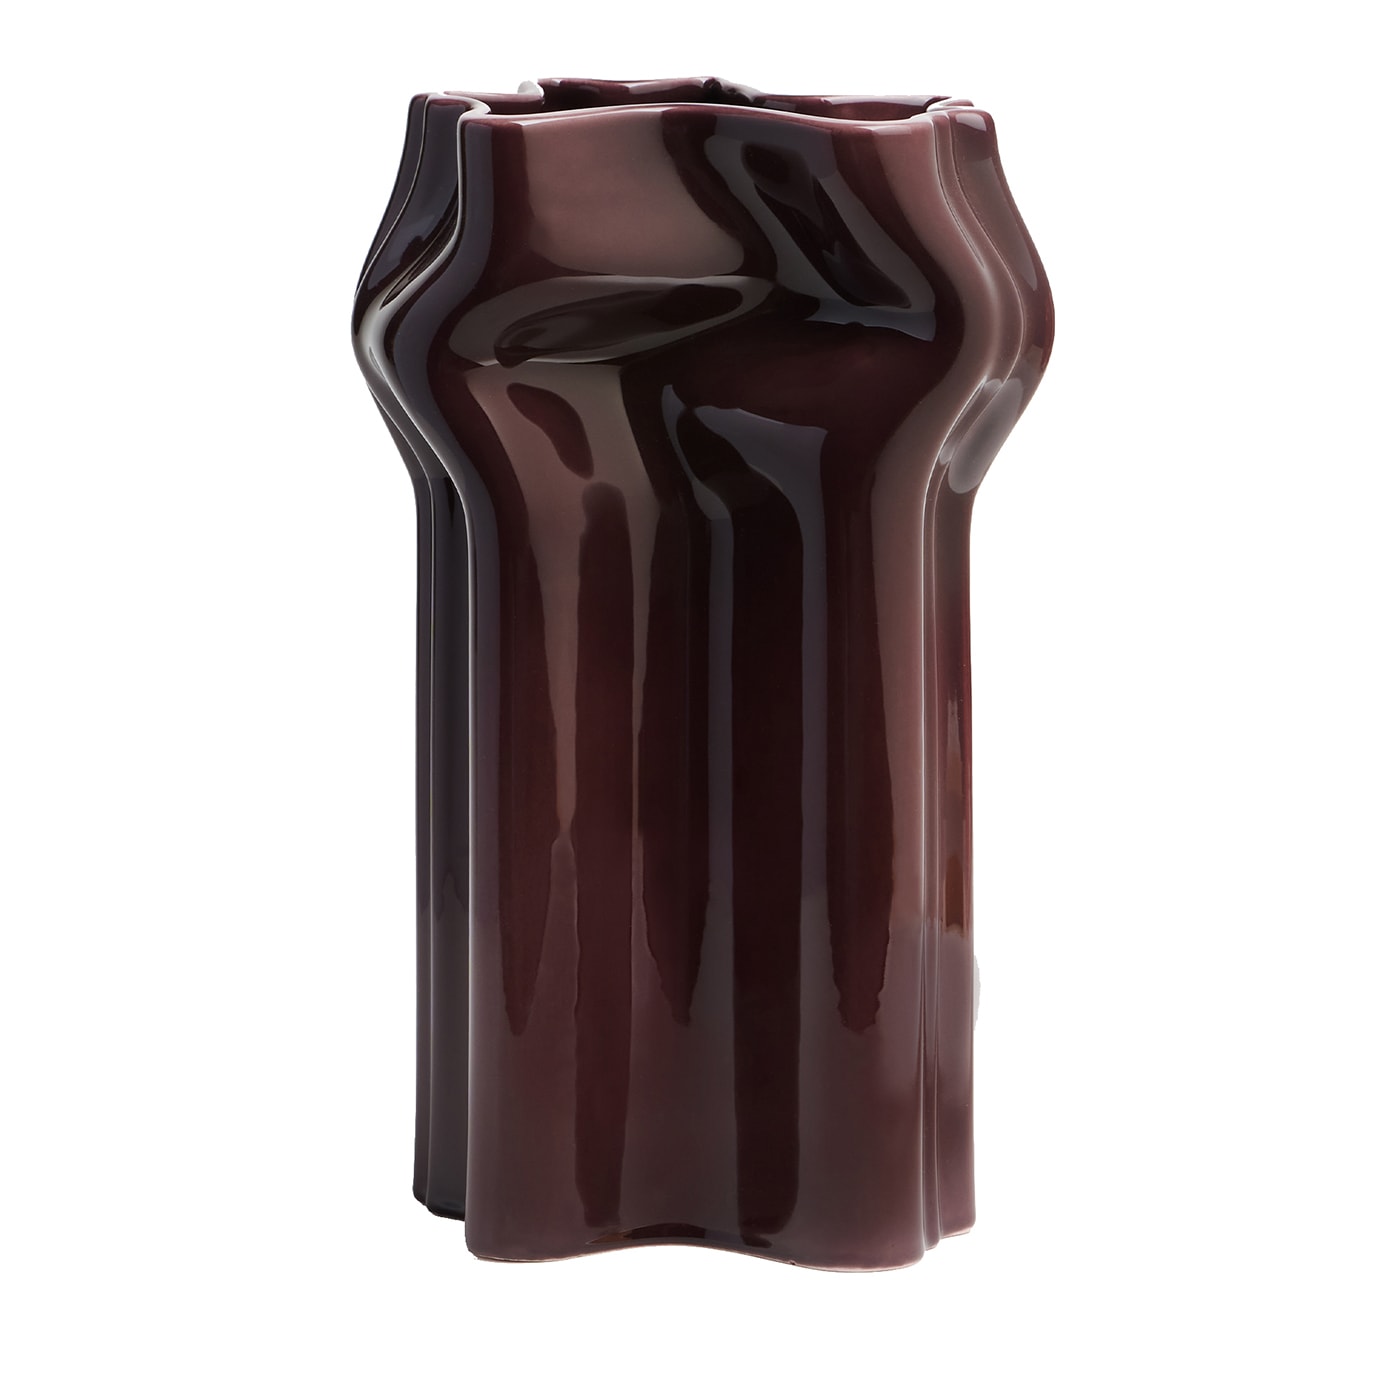 Gonfiato Brown Vase - Nuove Forme